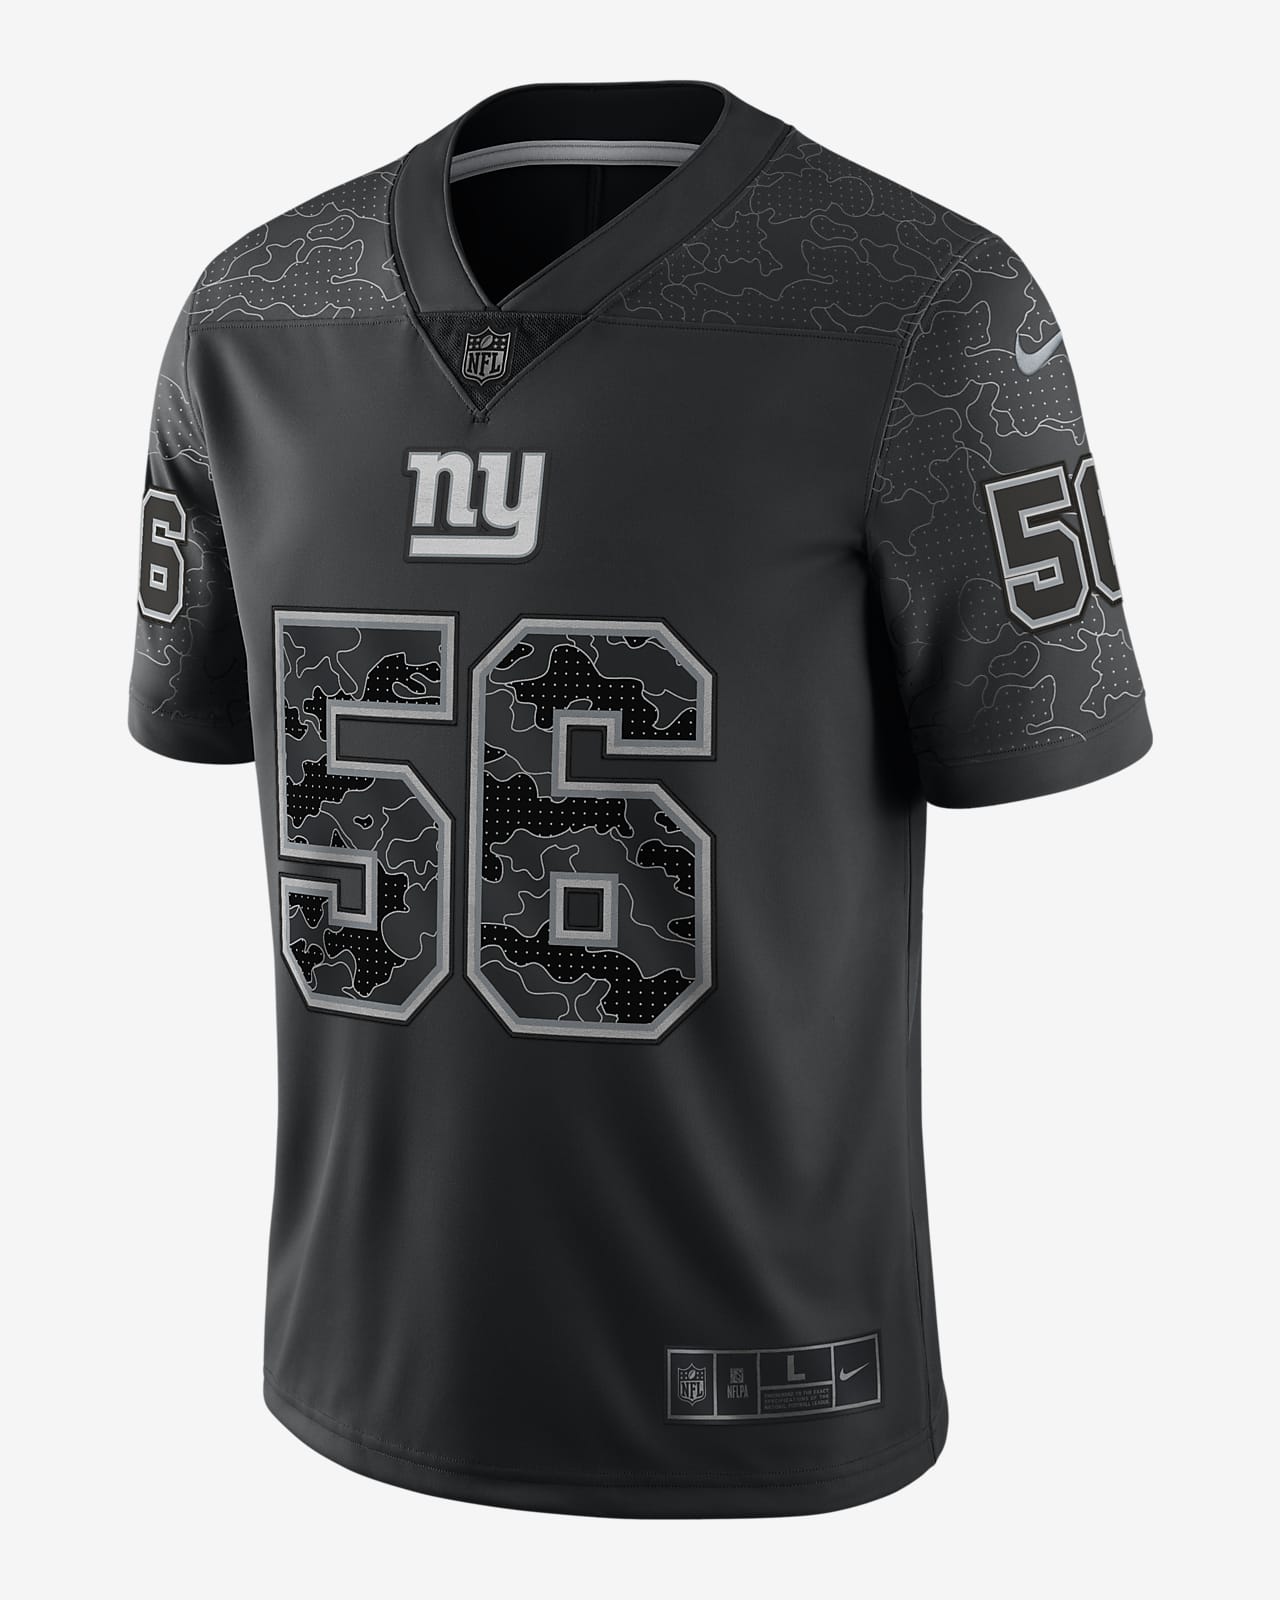 NFL New York Giants RFLCTV (Lawrence Taylor) Men's Fashion Football Jersey